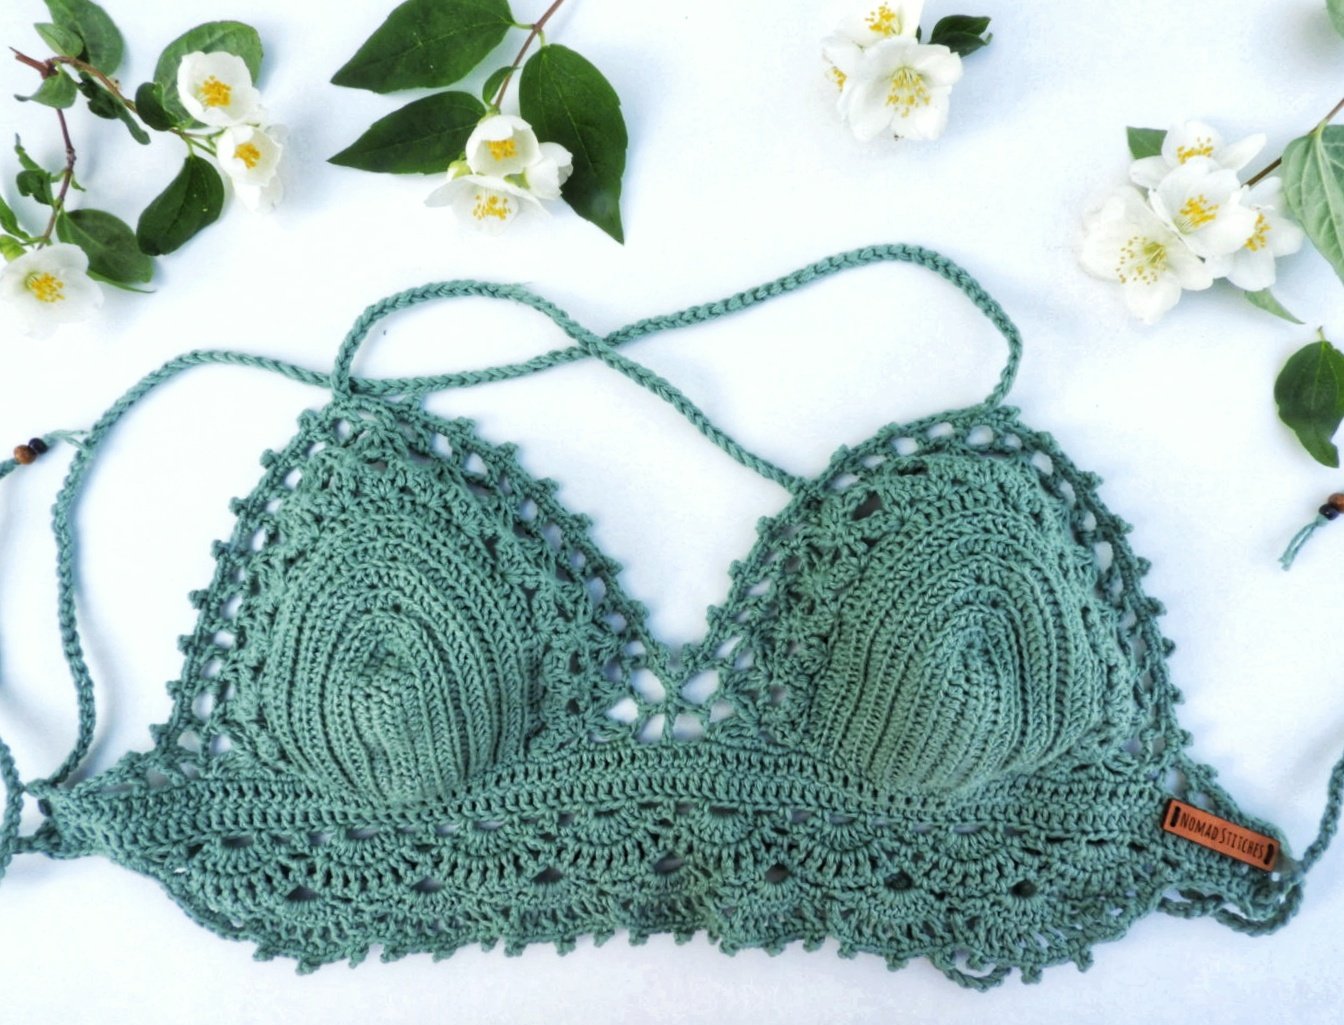 Speak Softly Crochet Lace Bralette (Dusty Blush) · NanaMacs